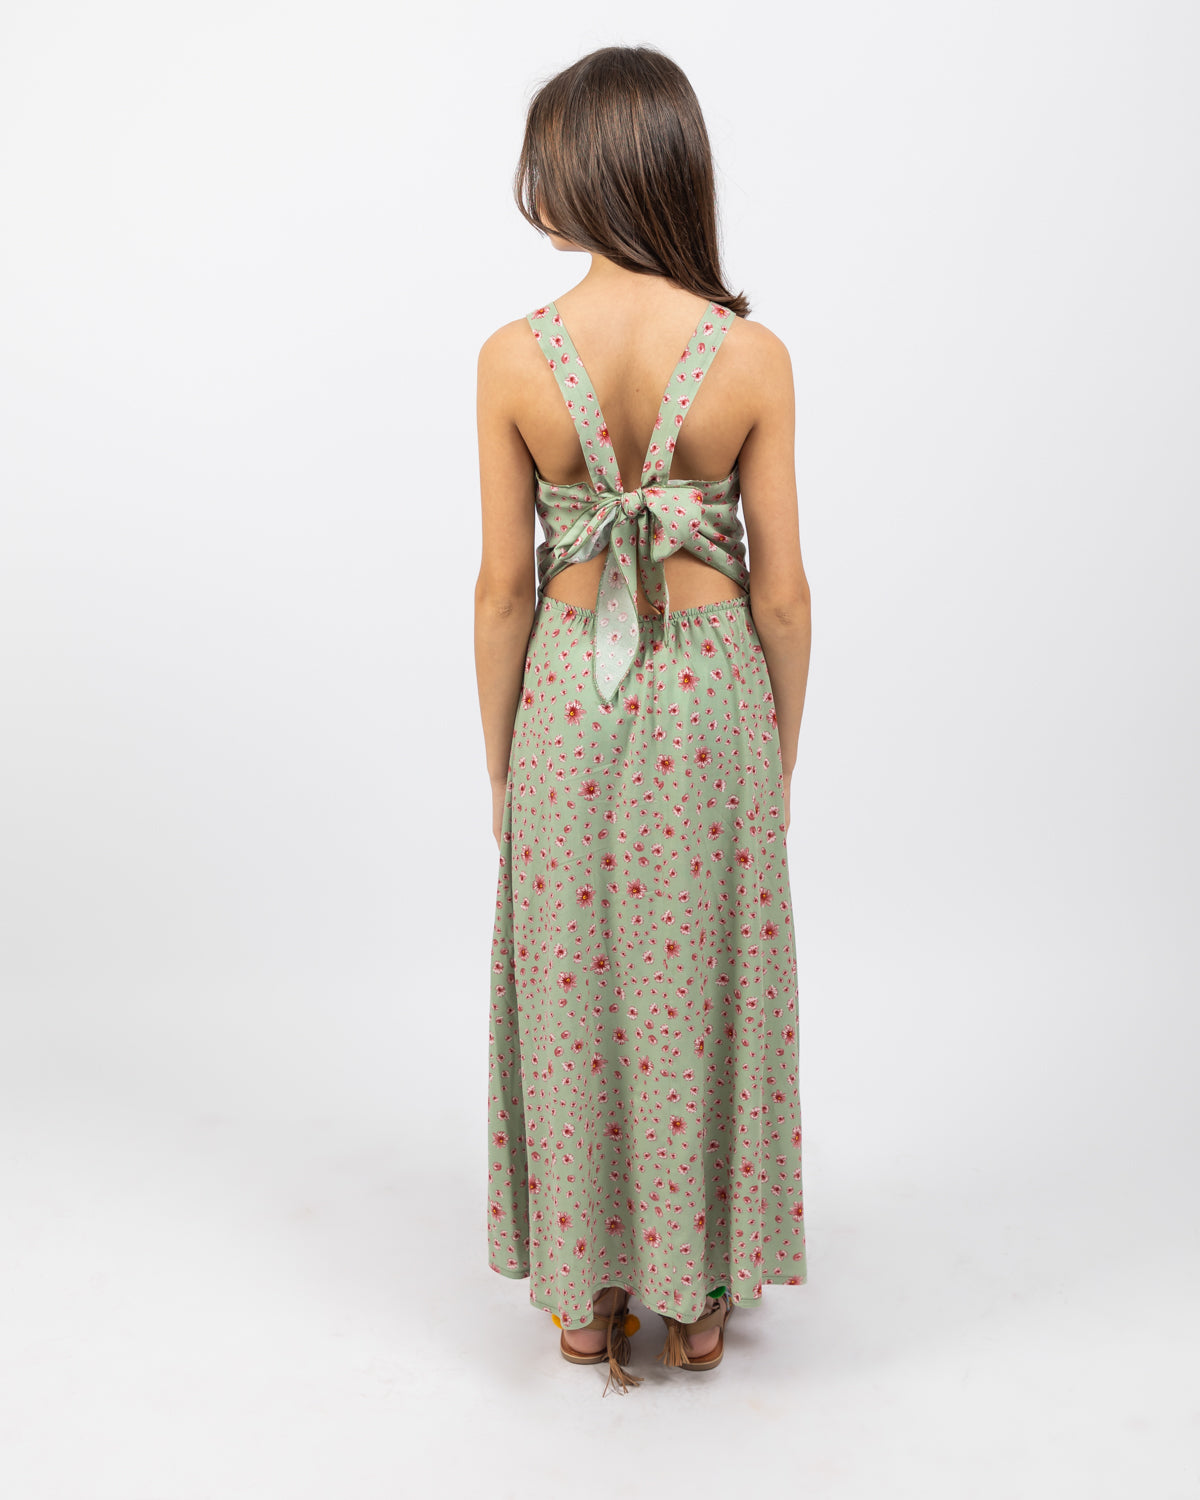 Sleeveless Floral Dress For Girls - Green